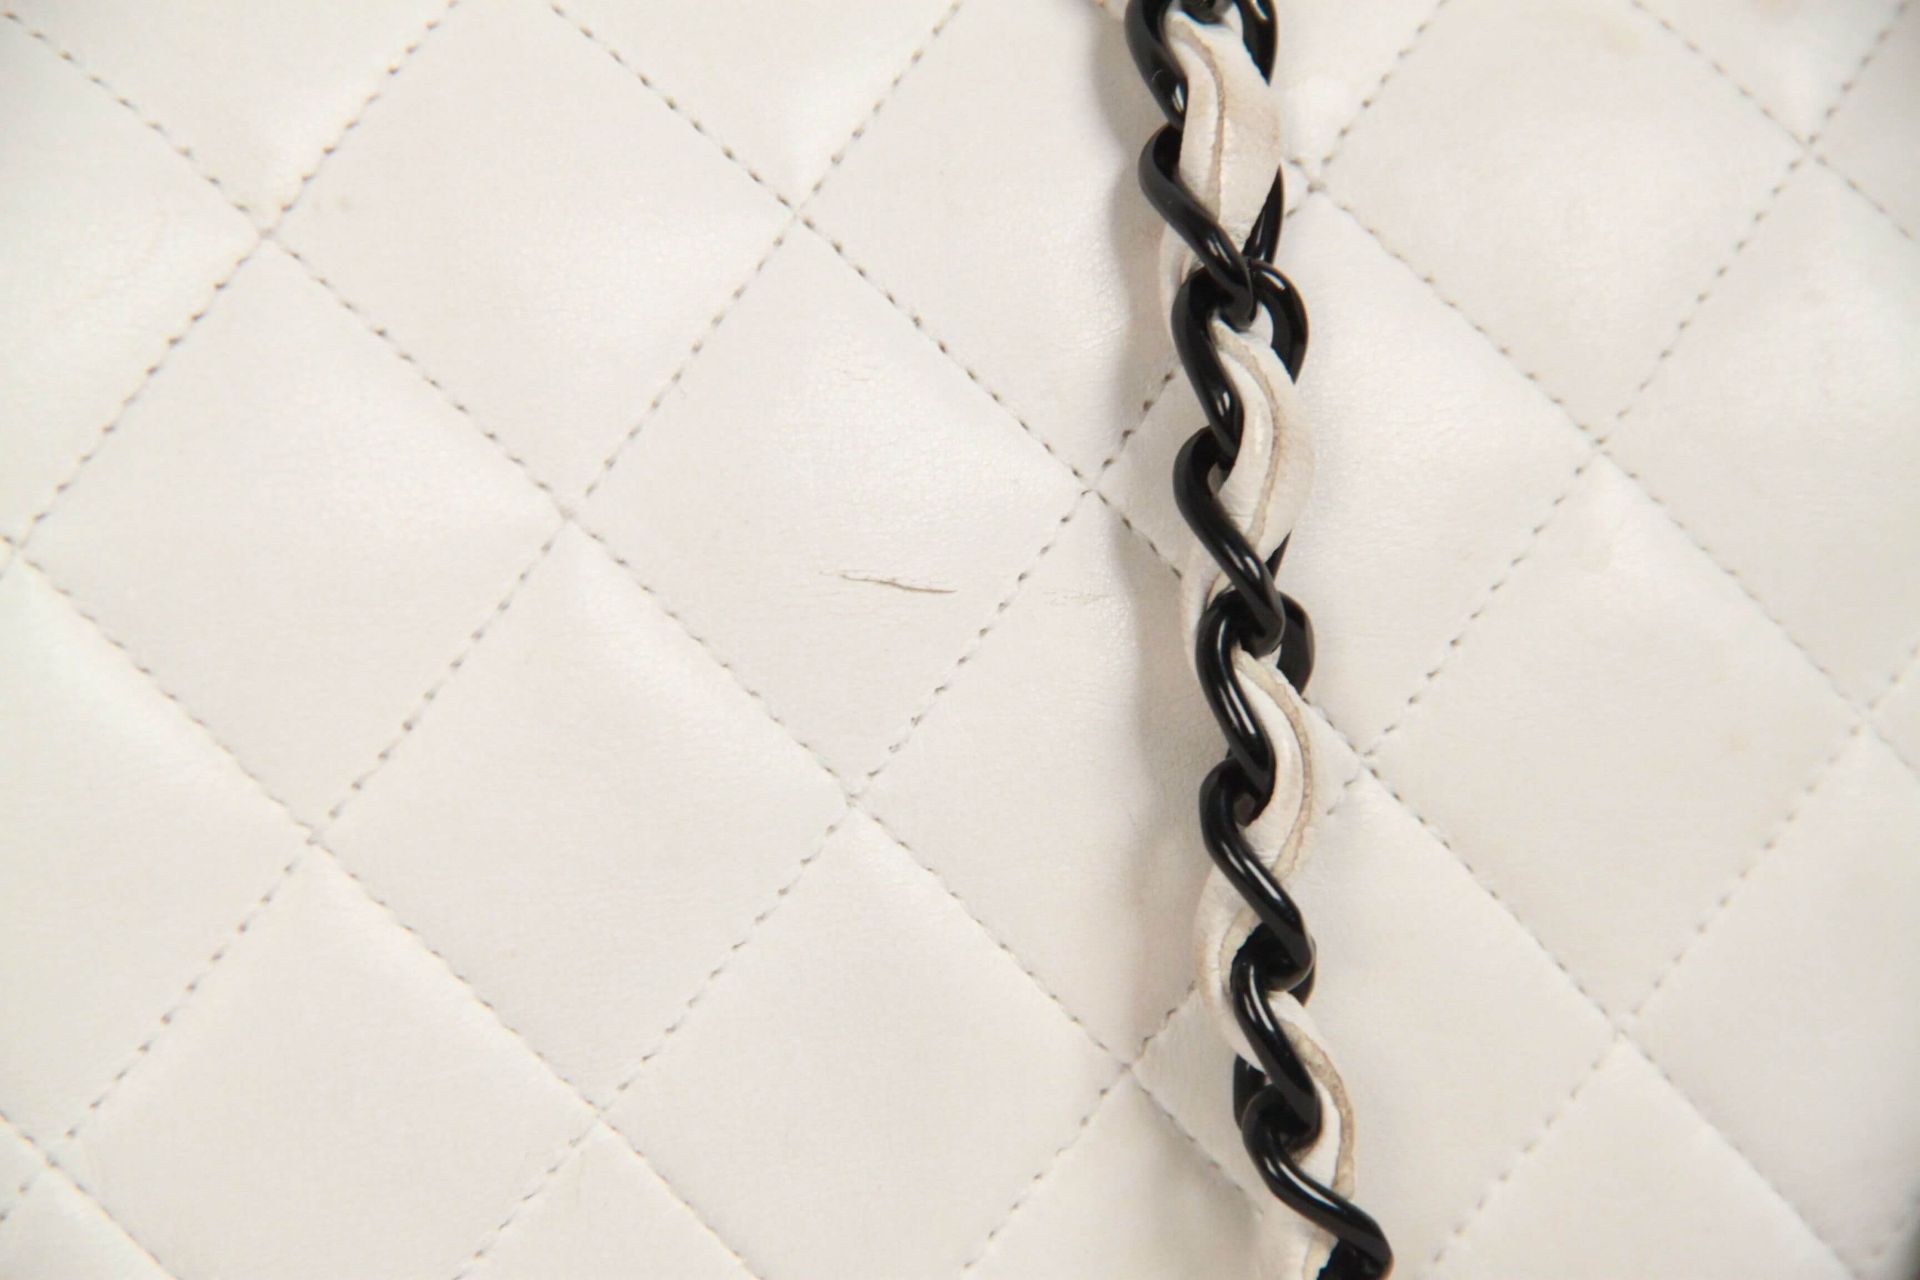 Chanel Vintage White Quilted Leather Shoulder Bag - Image 3 of 11